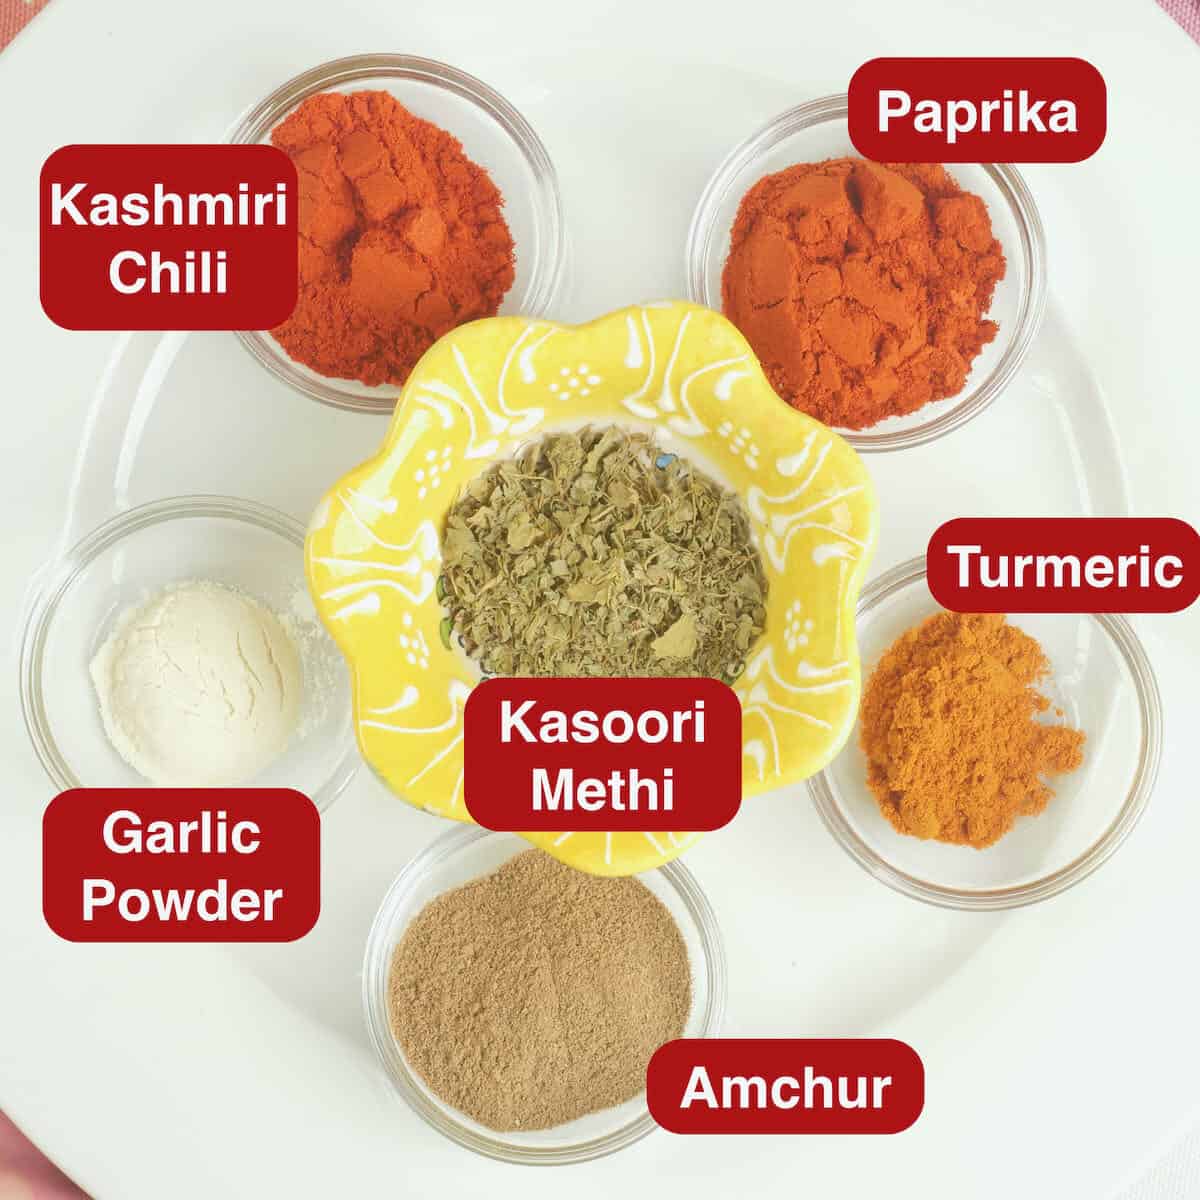 Tandoori masala ground spices gathered.